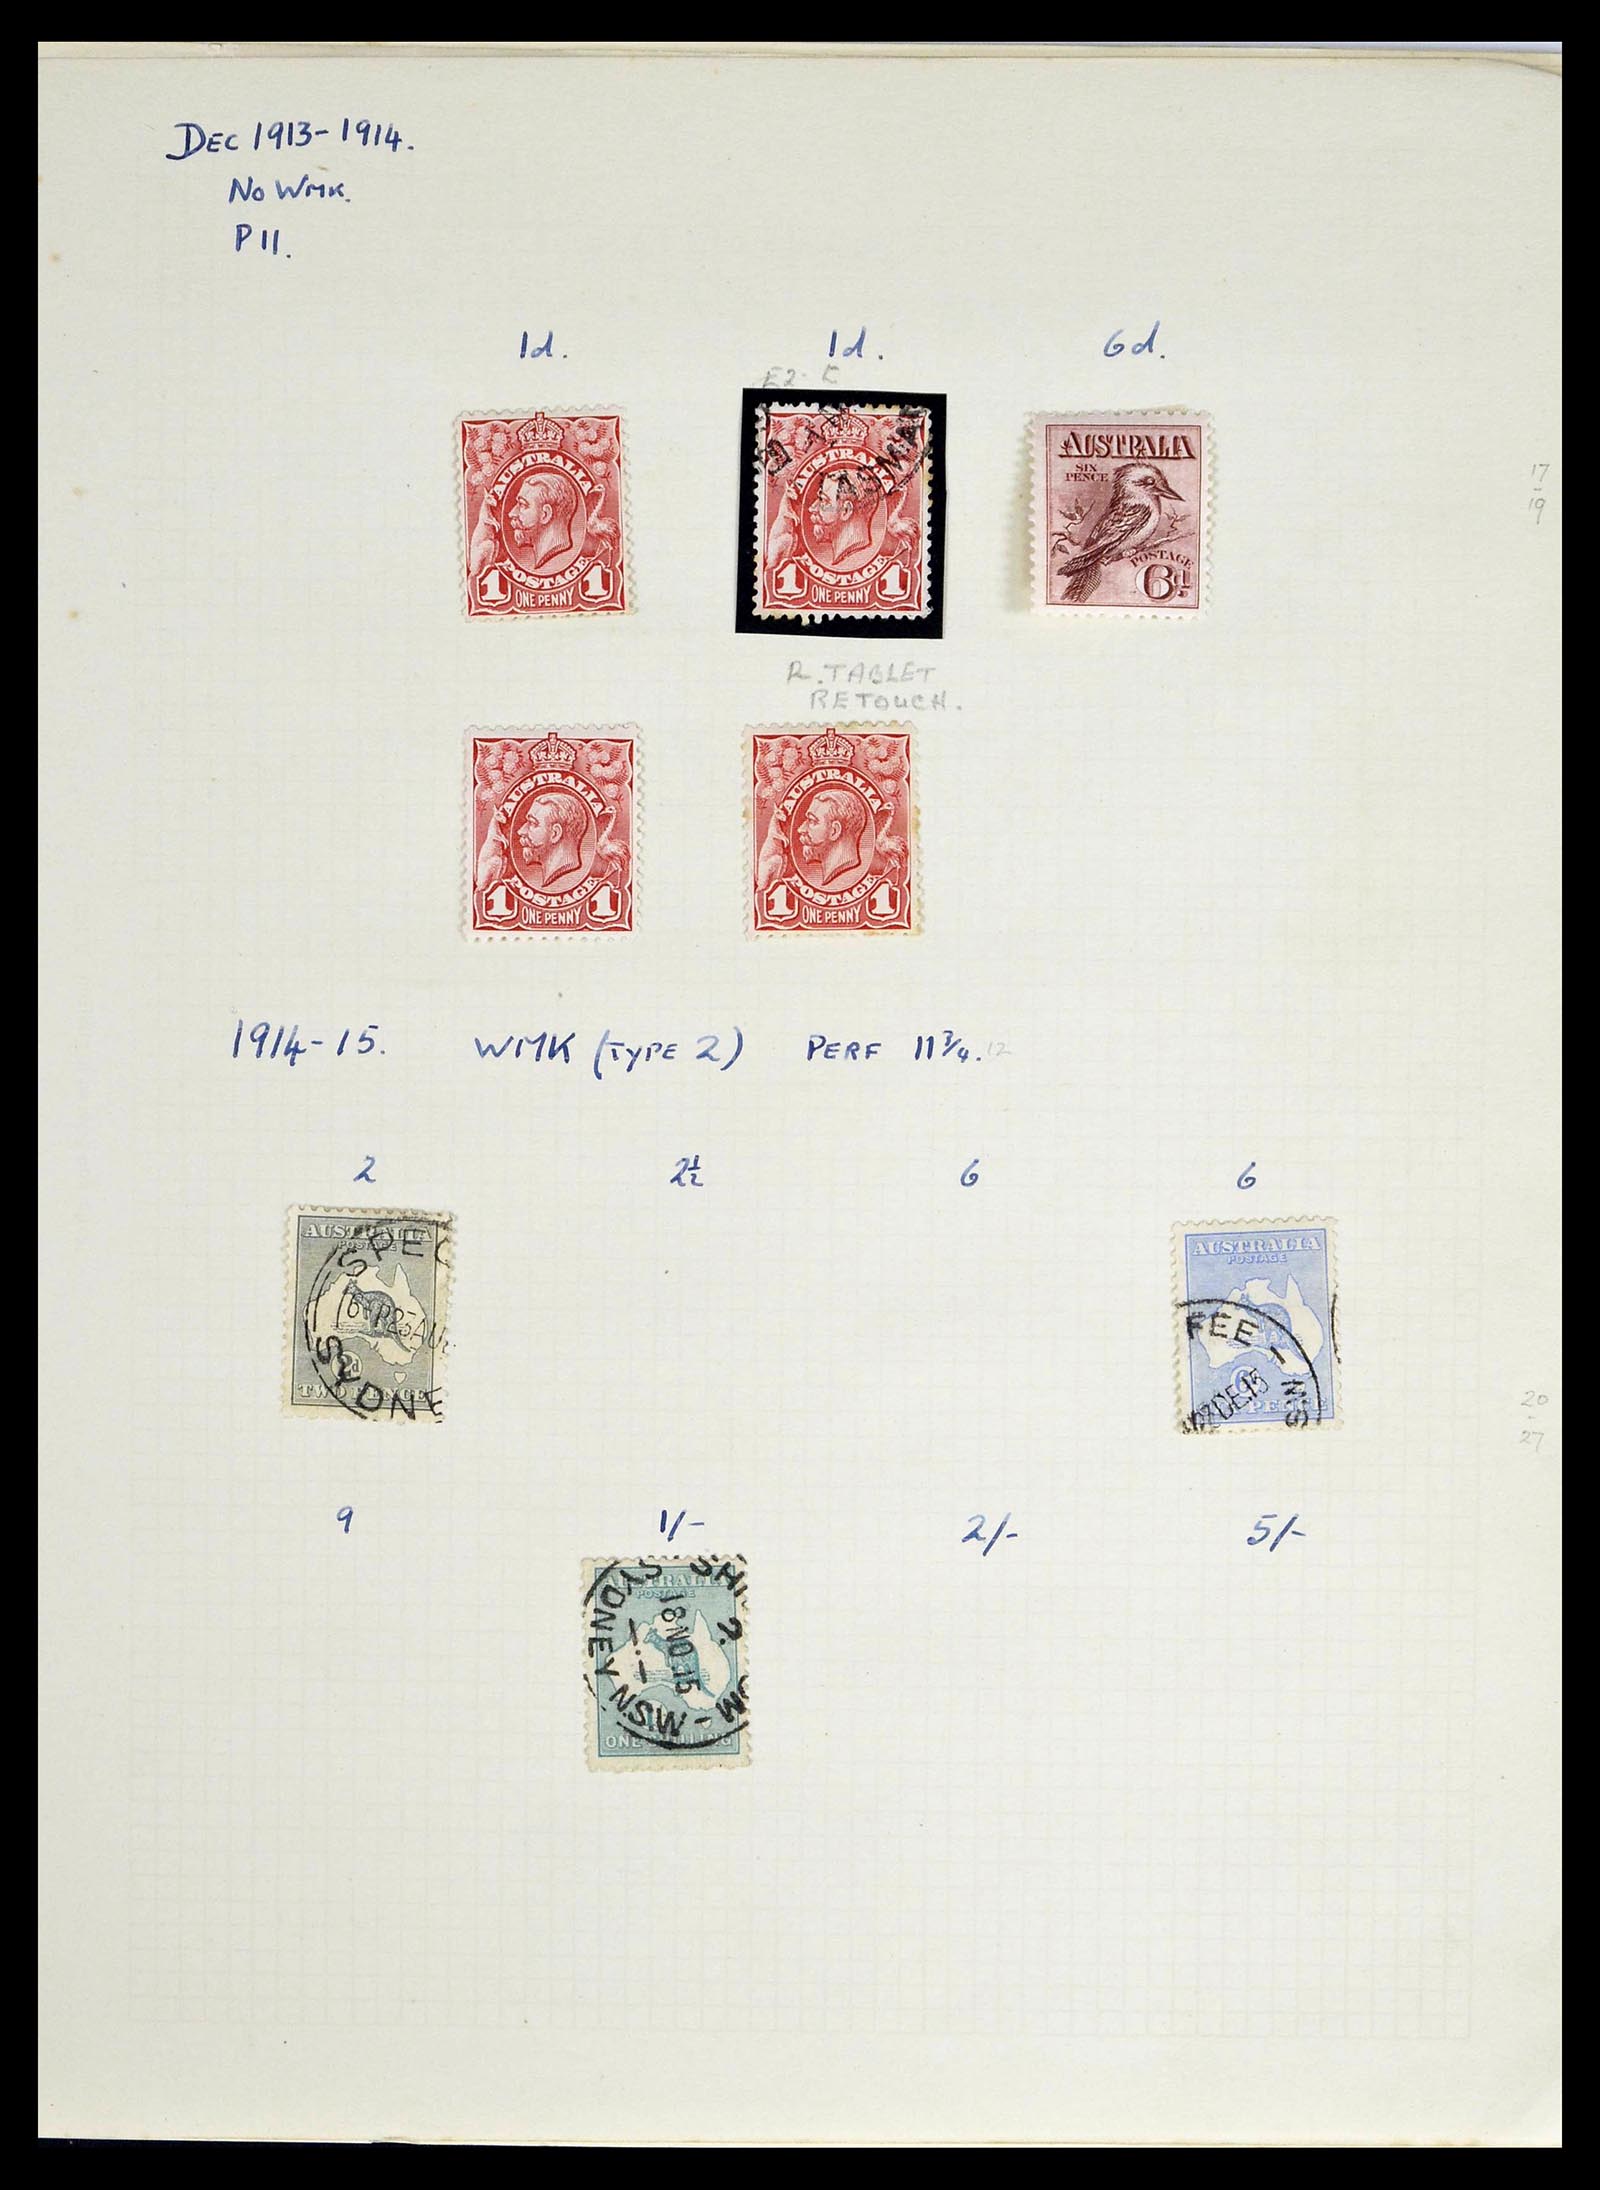 39166 0003 - Stamp collection 39166 Australia 1913-1949.